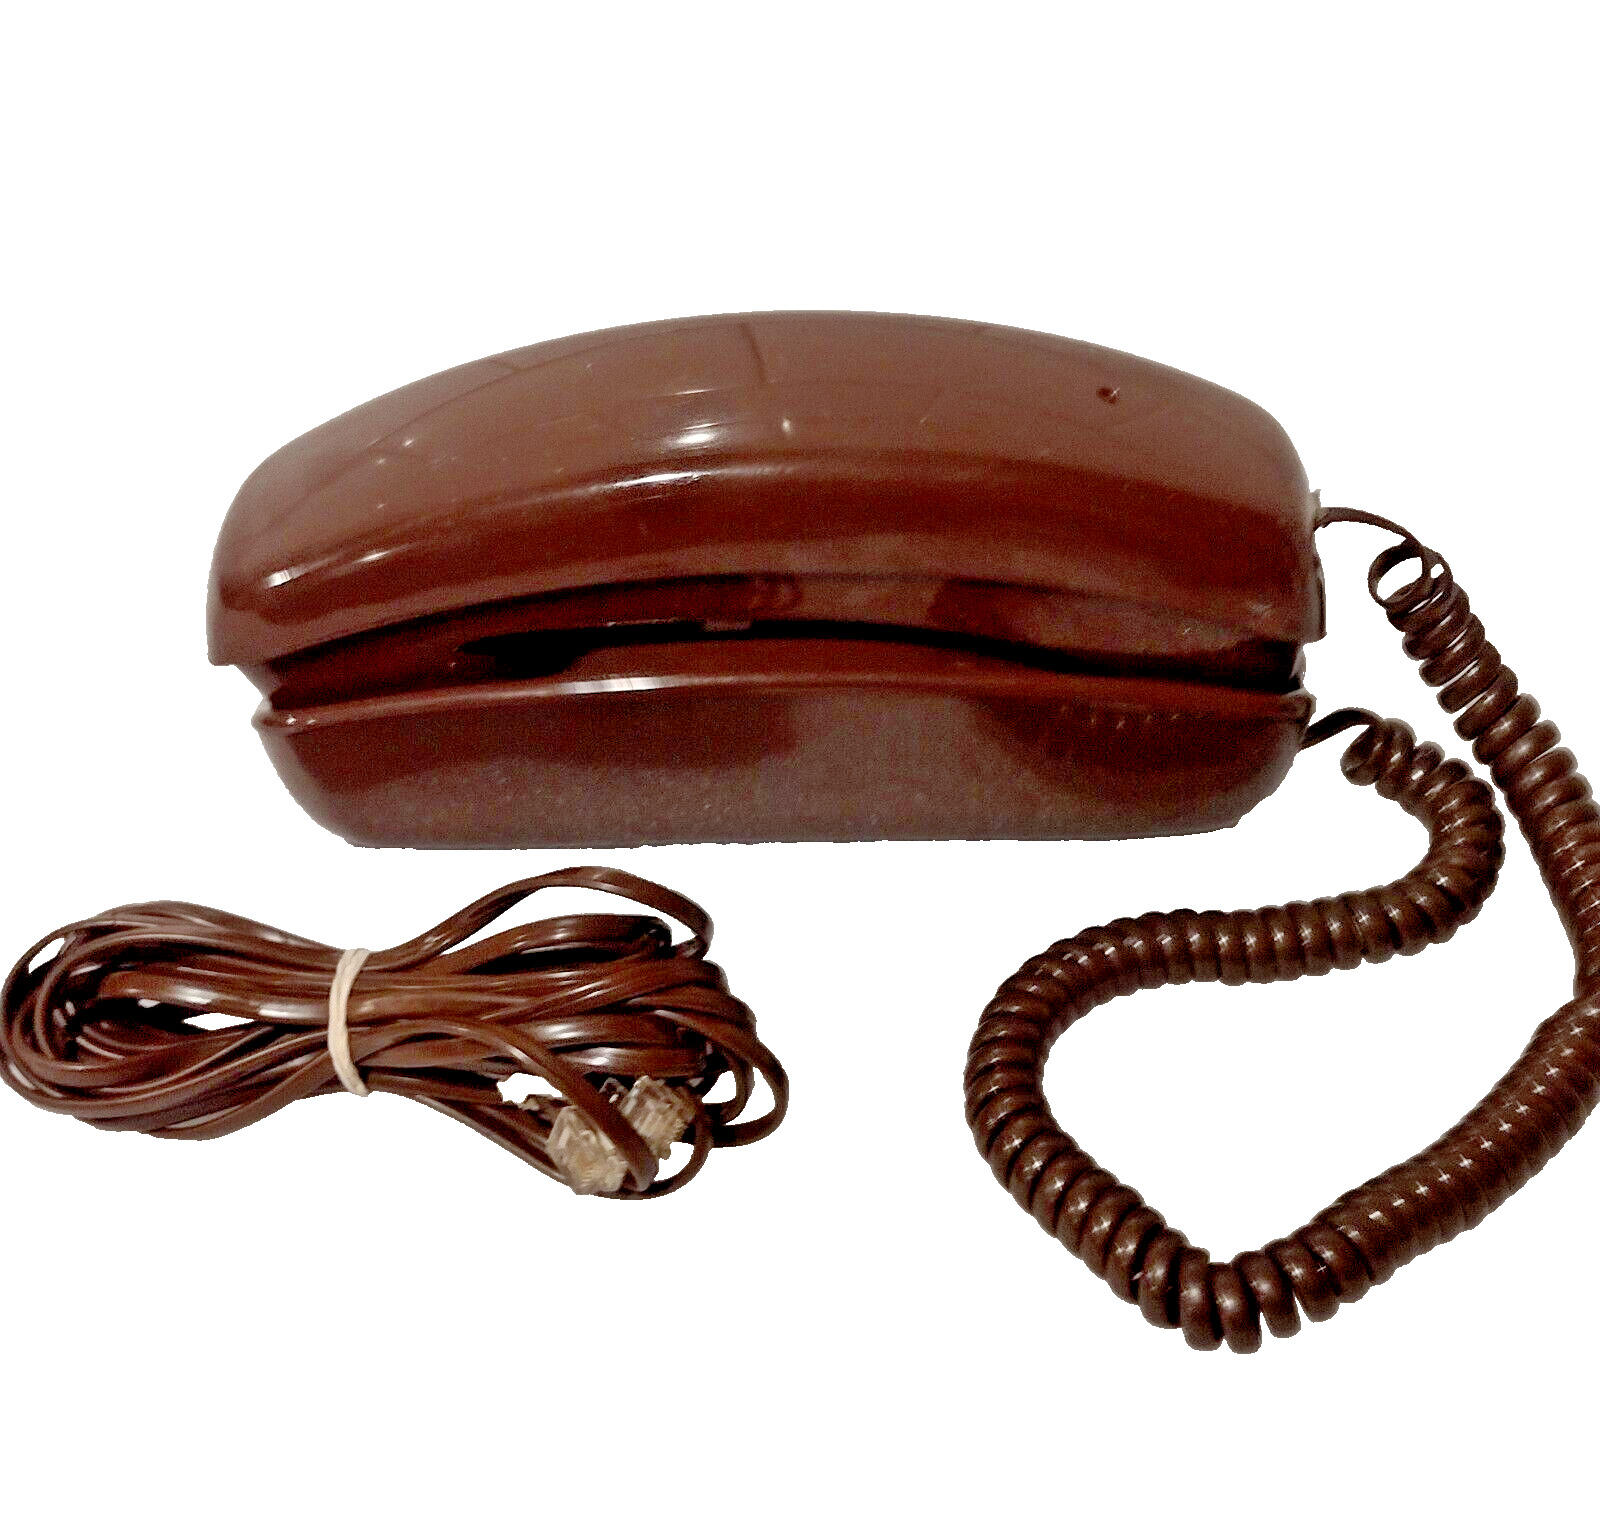 Vintage Bell 51350 Favorite Trimline Brown Push Button Phone Telephone Retro